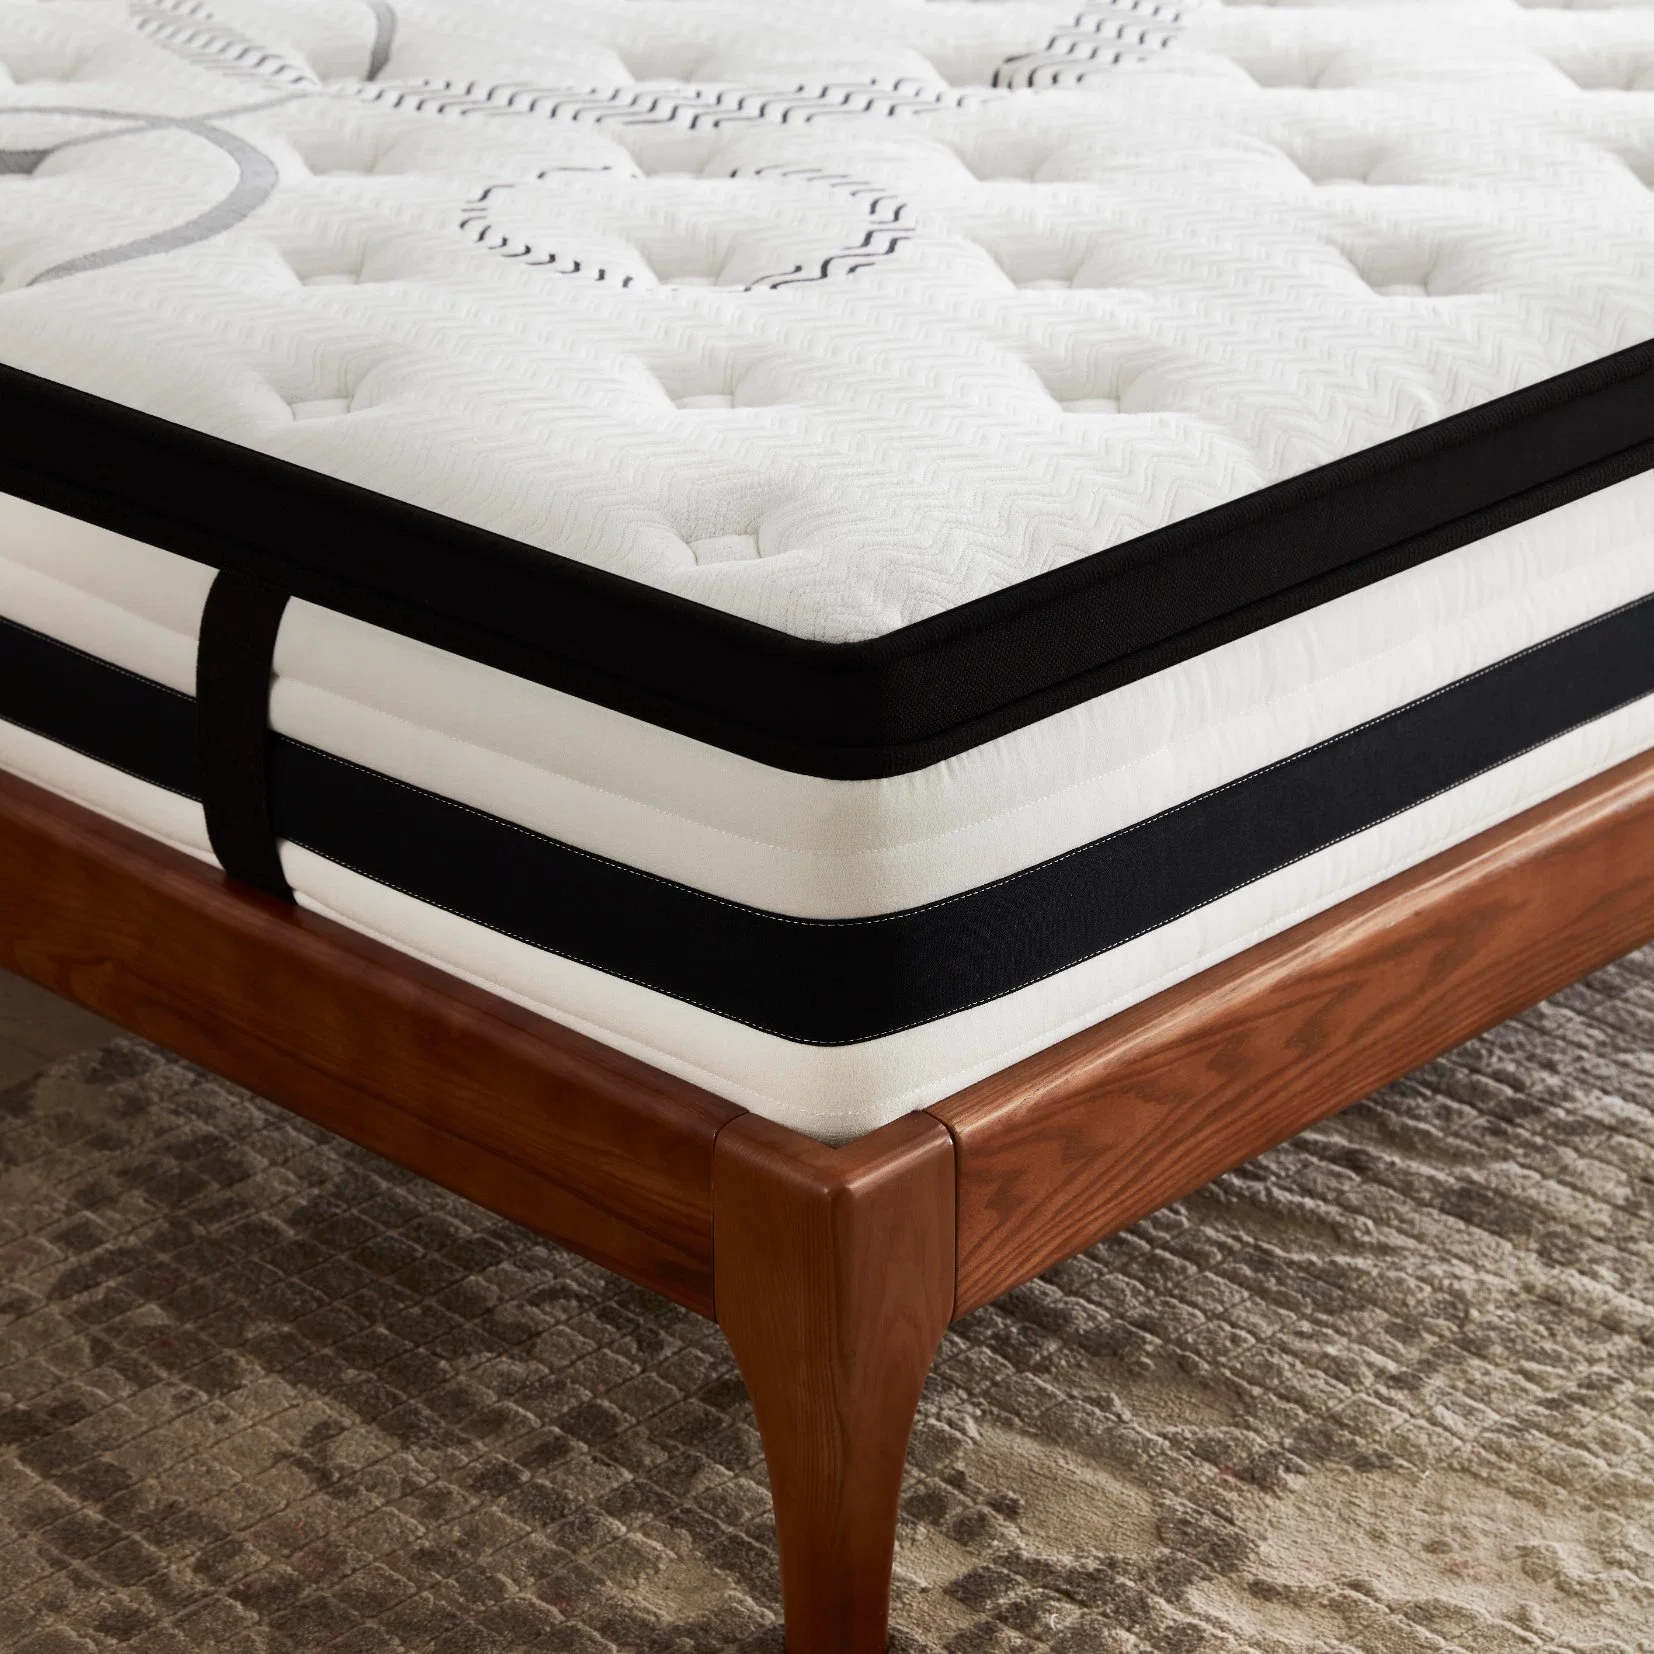 High Density Soft Nature Latex King Queen Full Size Gel Memory Foam Pocket Spring Bedroom Furniture Mattress